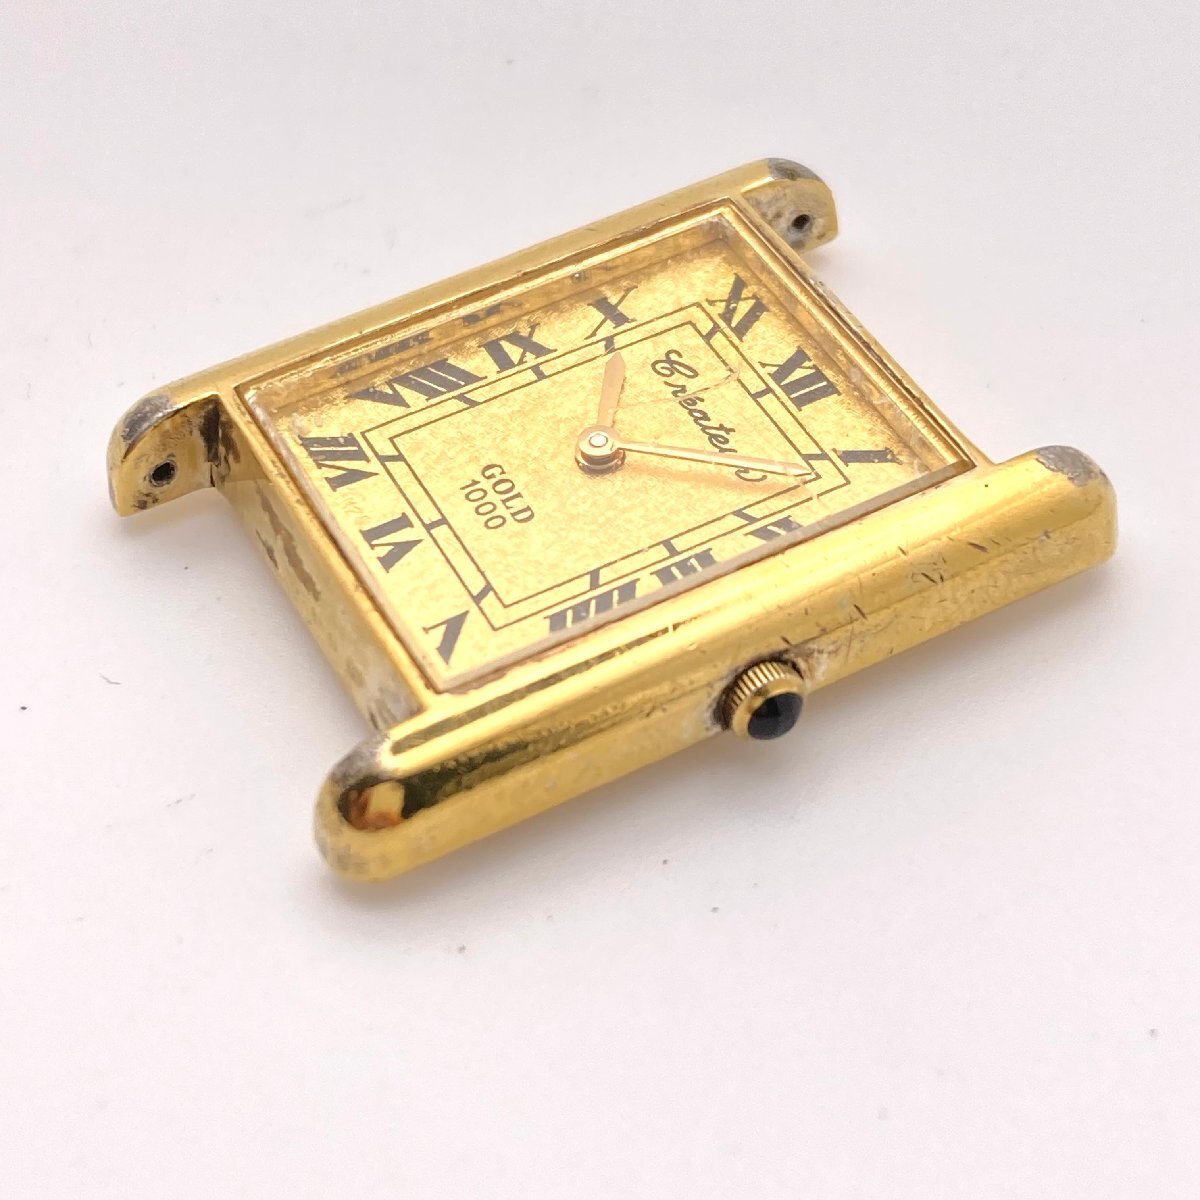 Createur クレアトゥール GOLD 1000 IS201 SV925 K24 G.F アンティーク レディース腕時計 ジャンク4-74-Cの画像2